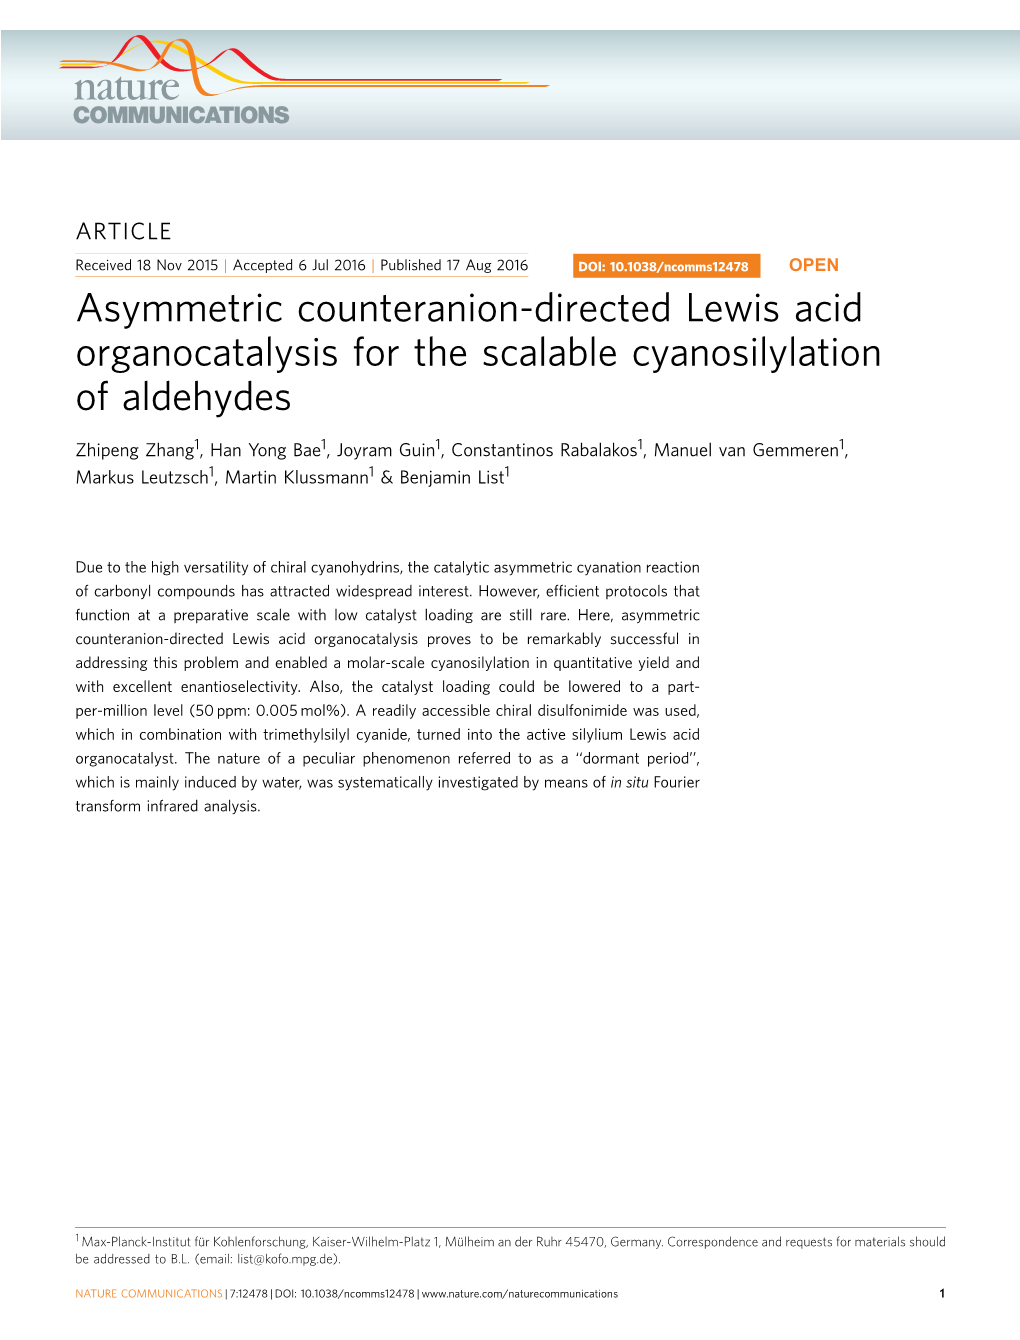 Asymmetric Counteranion-Directed Lewis Acid Organocatalysis for the Scalable Cyanosilylation of Aldehydes